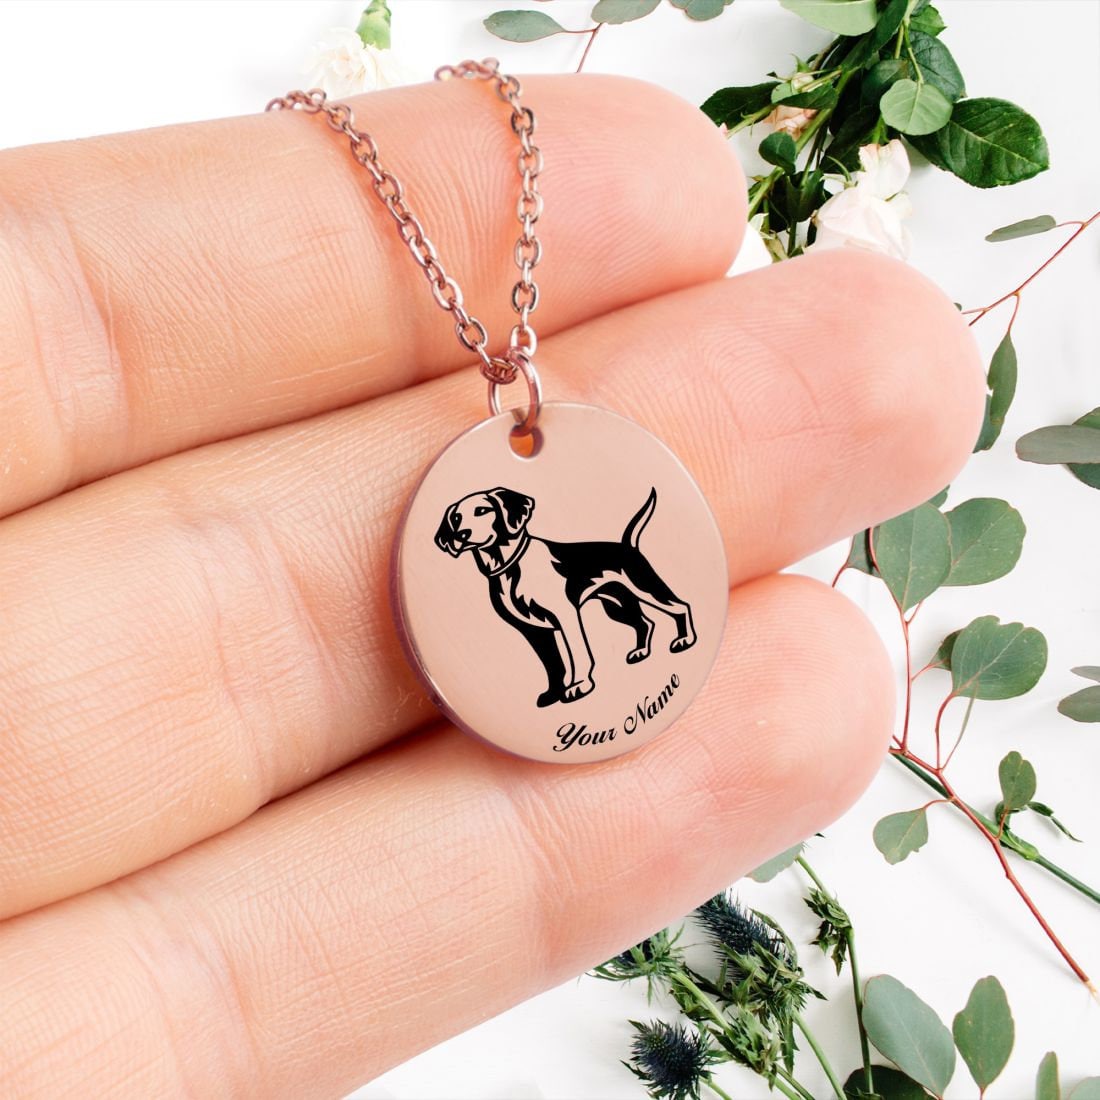 Brittany Spaniel Dog Portrait Necklace - Personalizable Jewelry